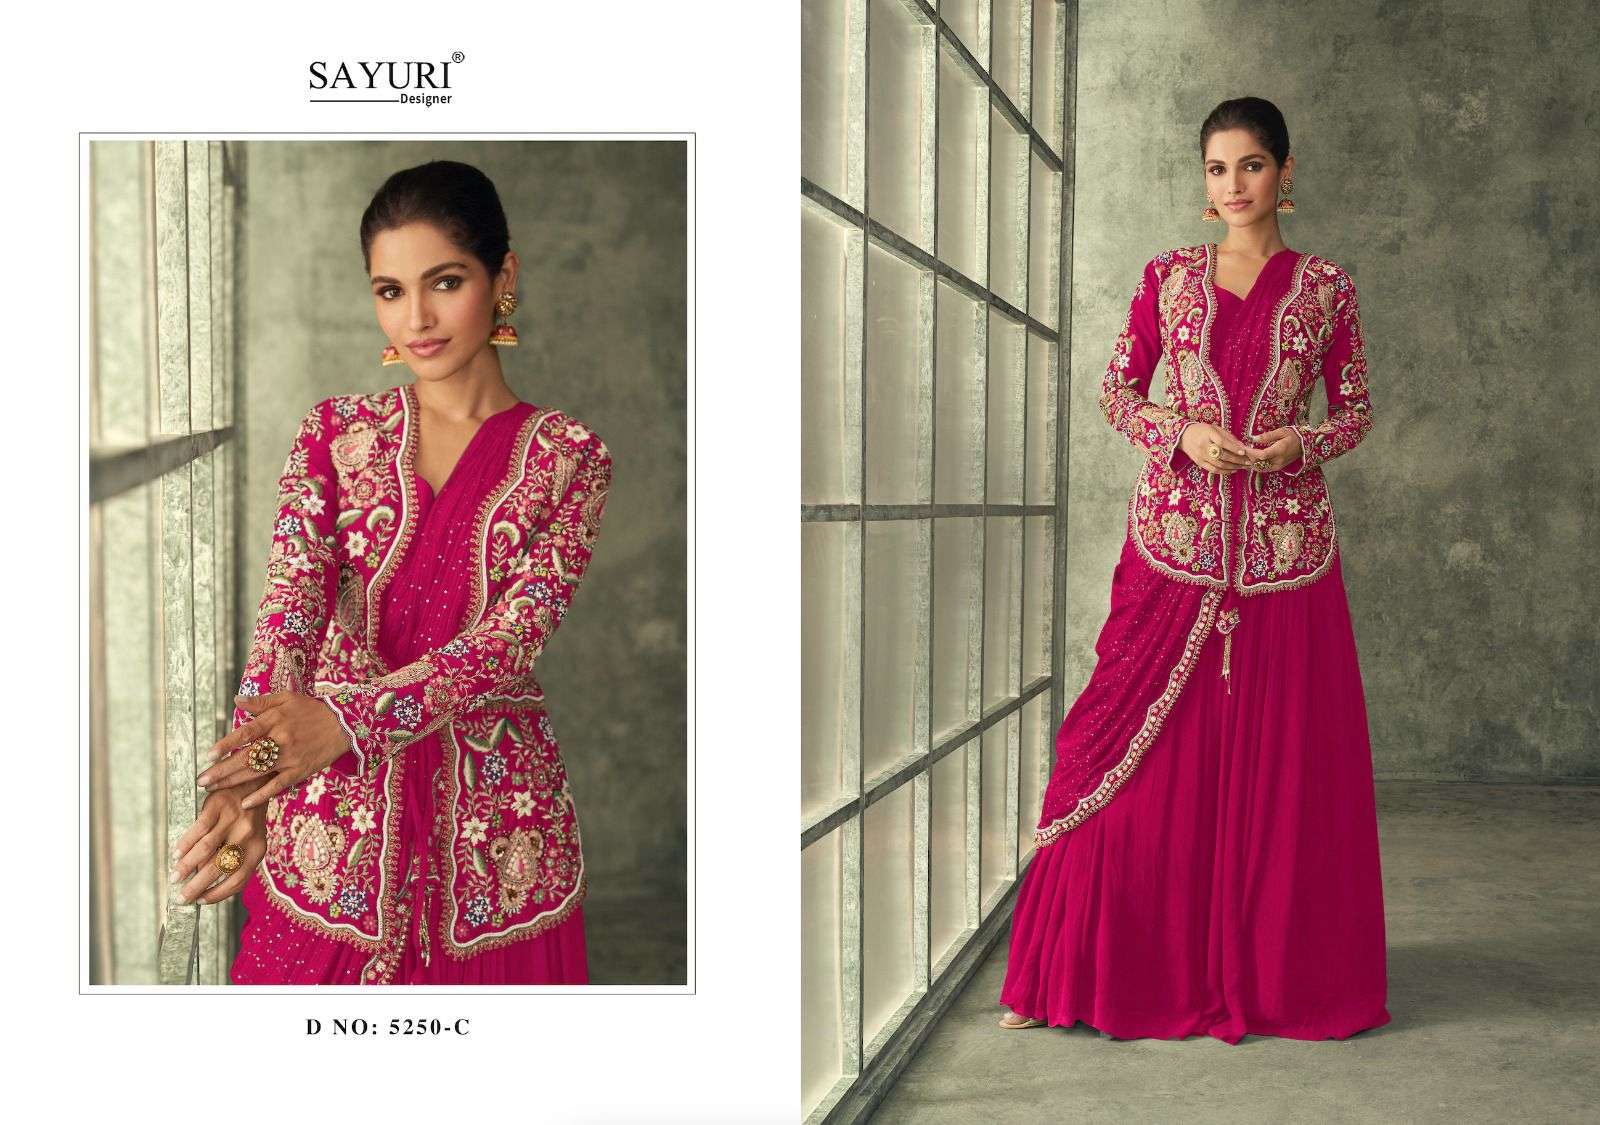 sayuri designer evergreen special 5250 colour series latest designer wedding lehenga wholesaler surat gujarat